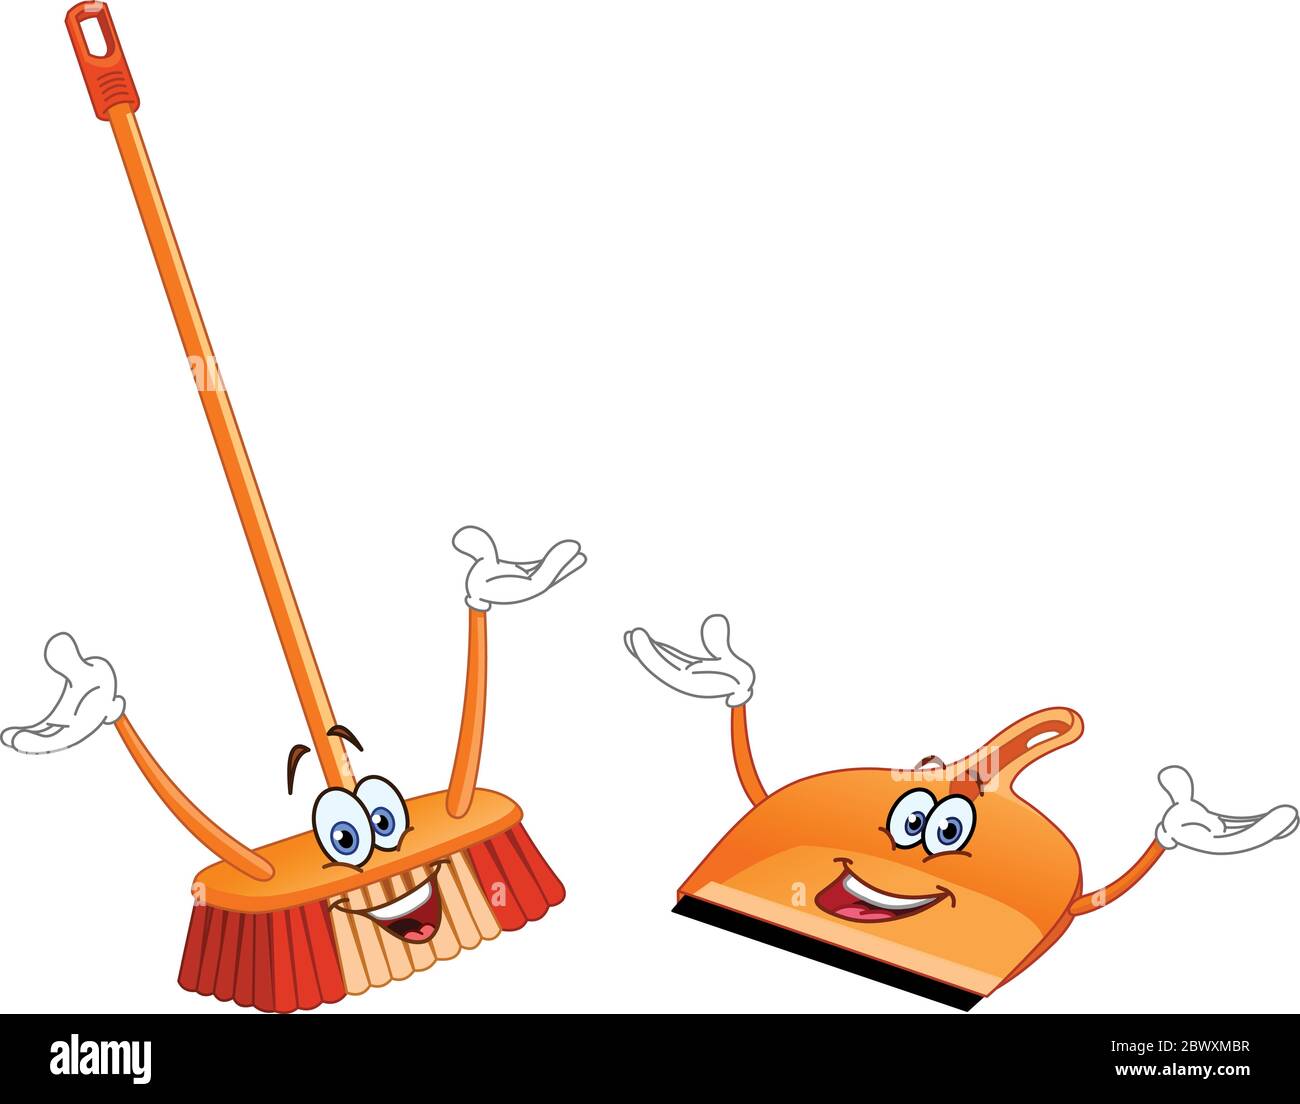 Broom and dustpan cartoon Stock Vector